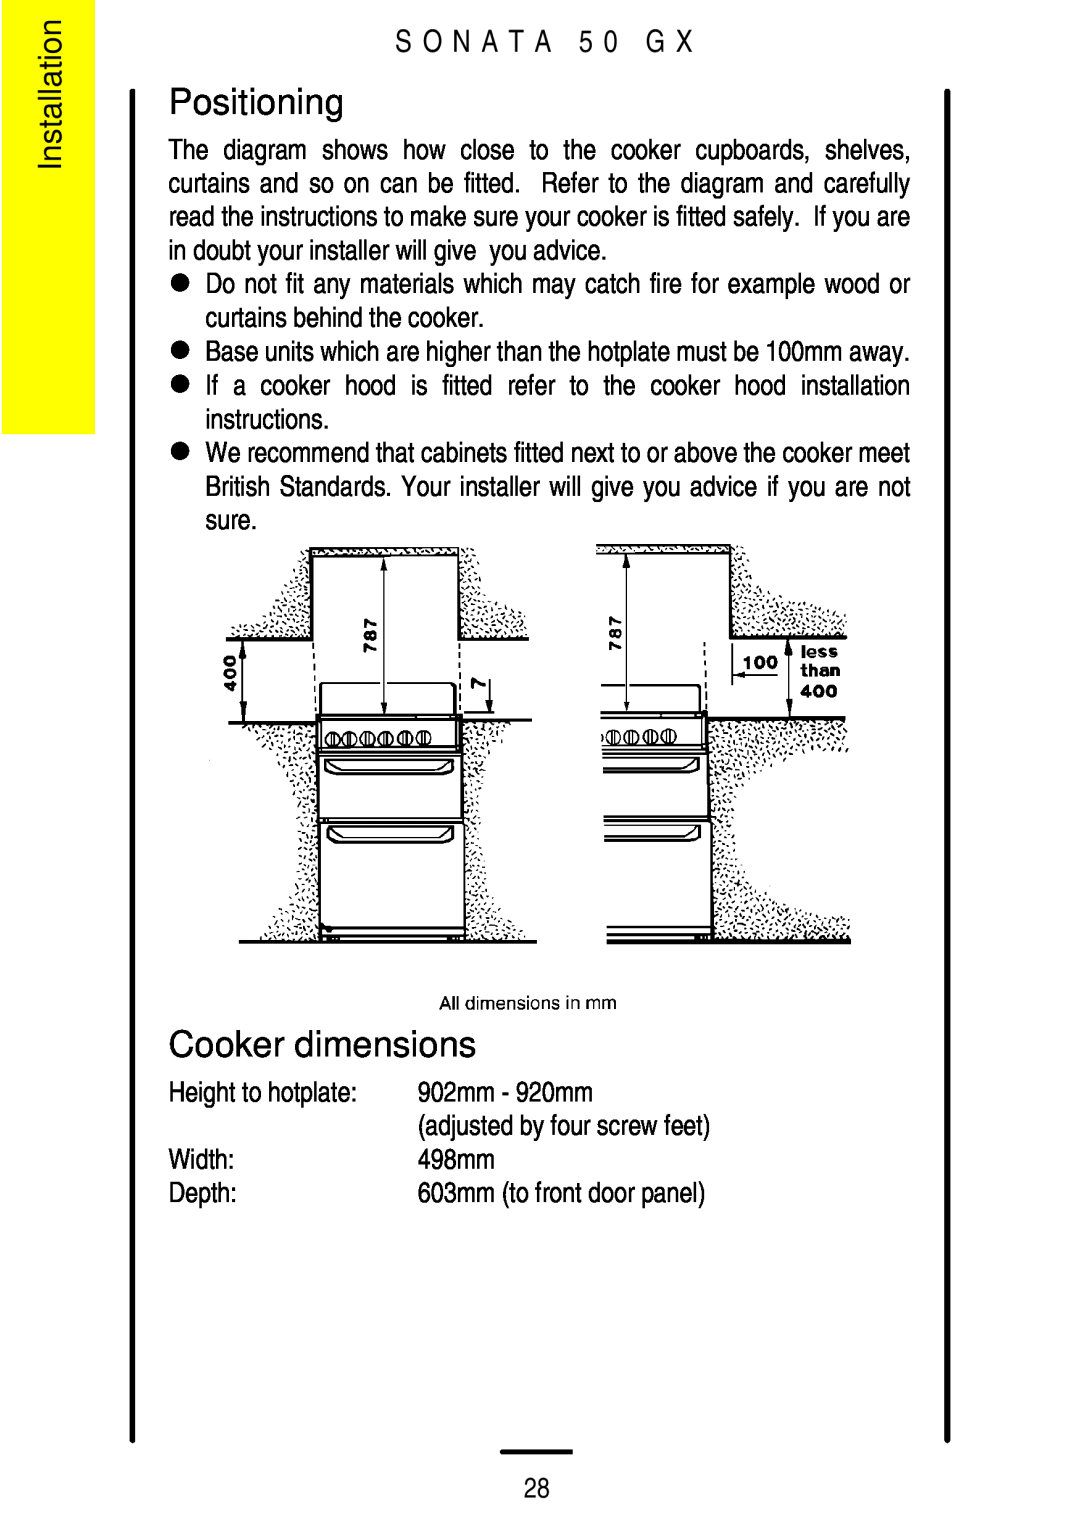 Parkinson Cowan SONATA 50GX installation instructions Positioning, Cooker dimensions, Installation 